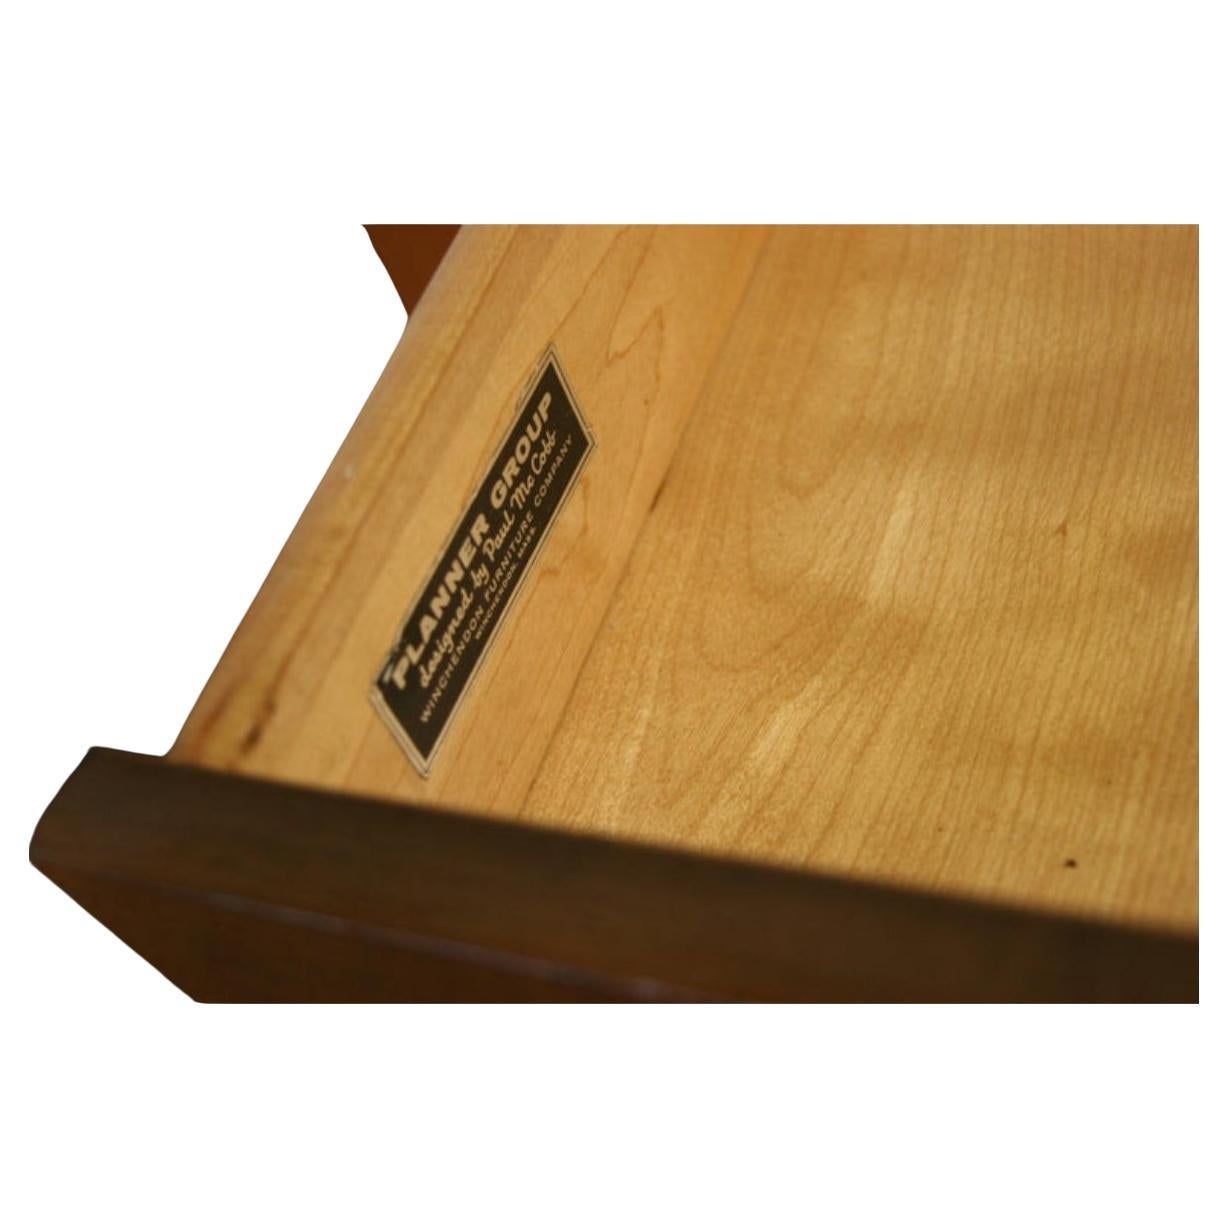 Woodwork Midcentury Paul McCobb Maple 20 Drawer Dresser #1510 blonde Finish T Pulls For Sale